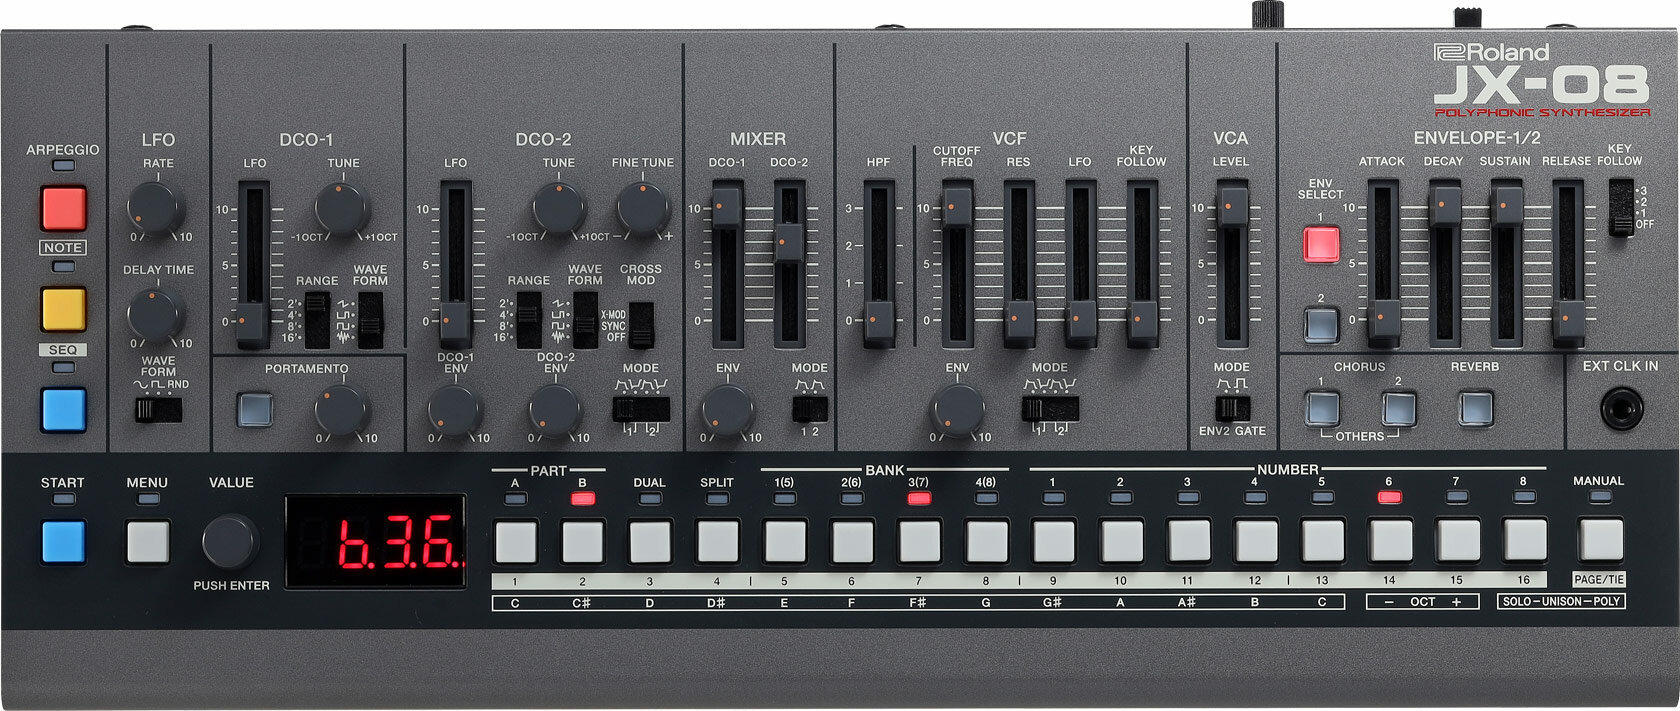 Цифровой синтезатор Roland JX-08